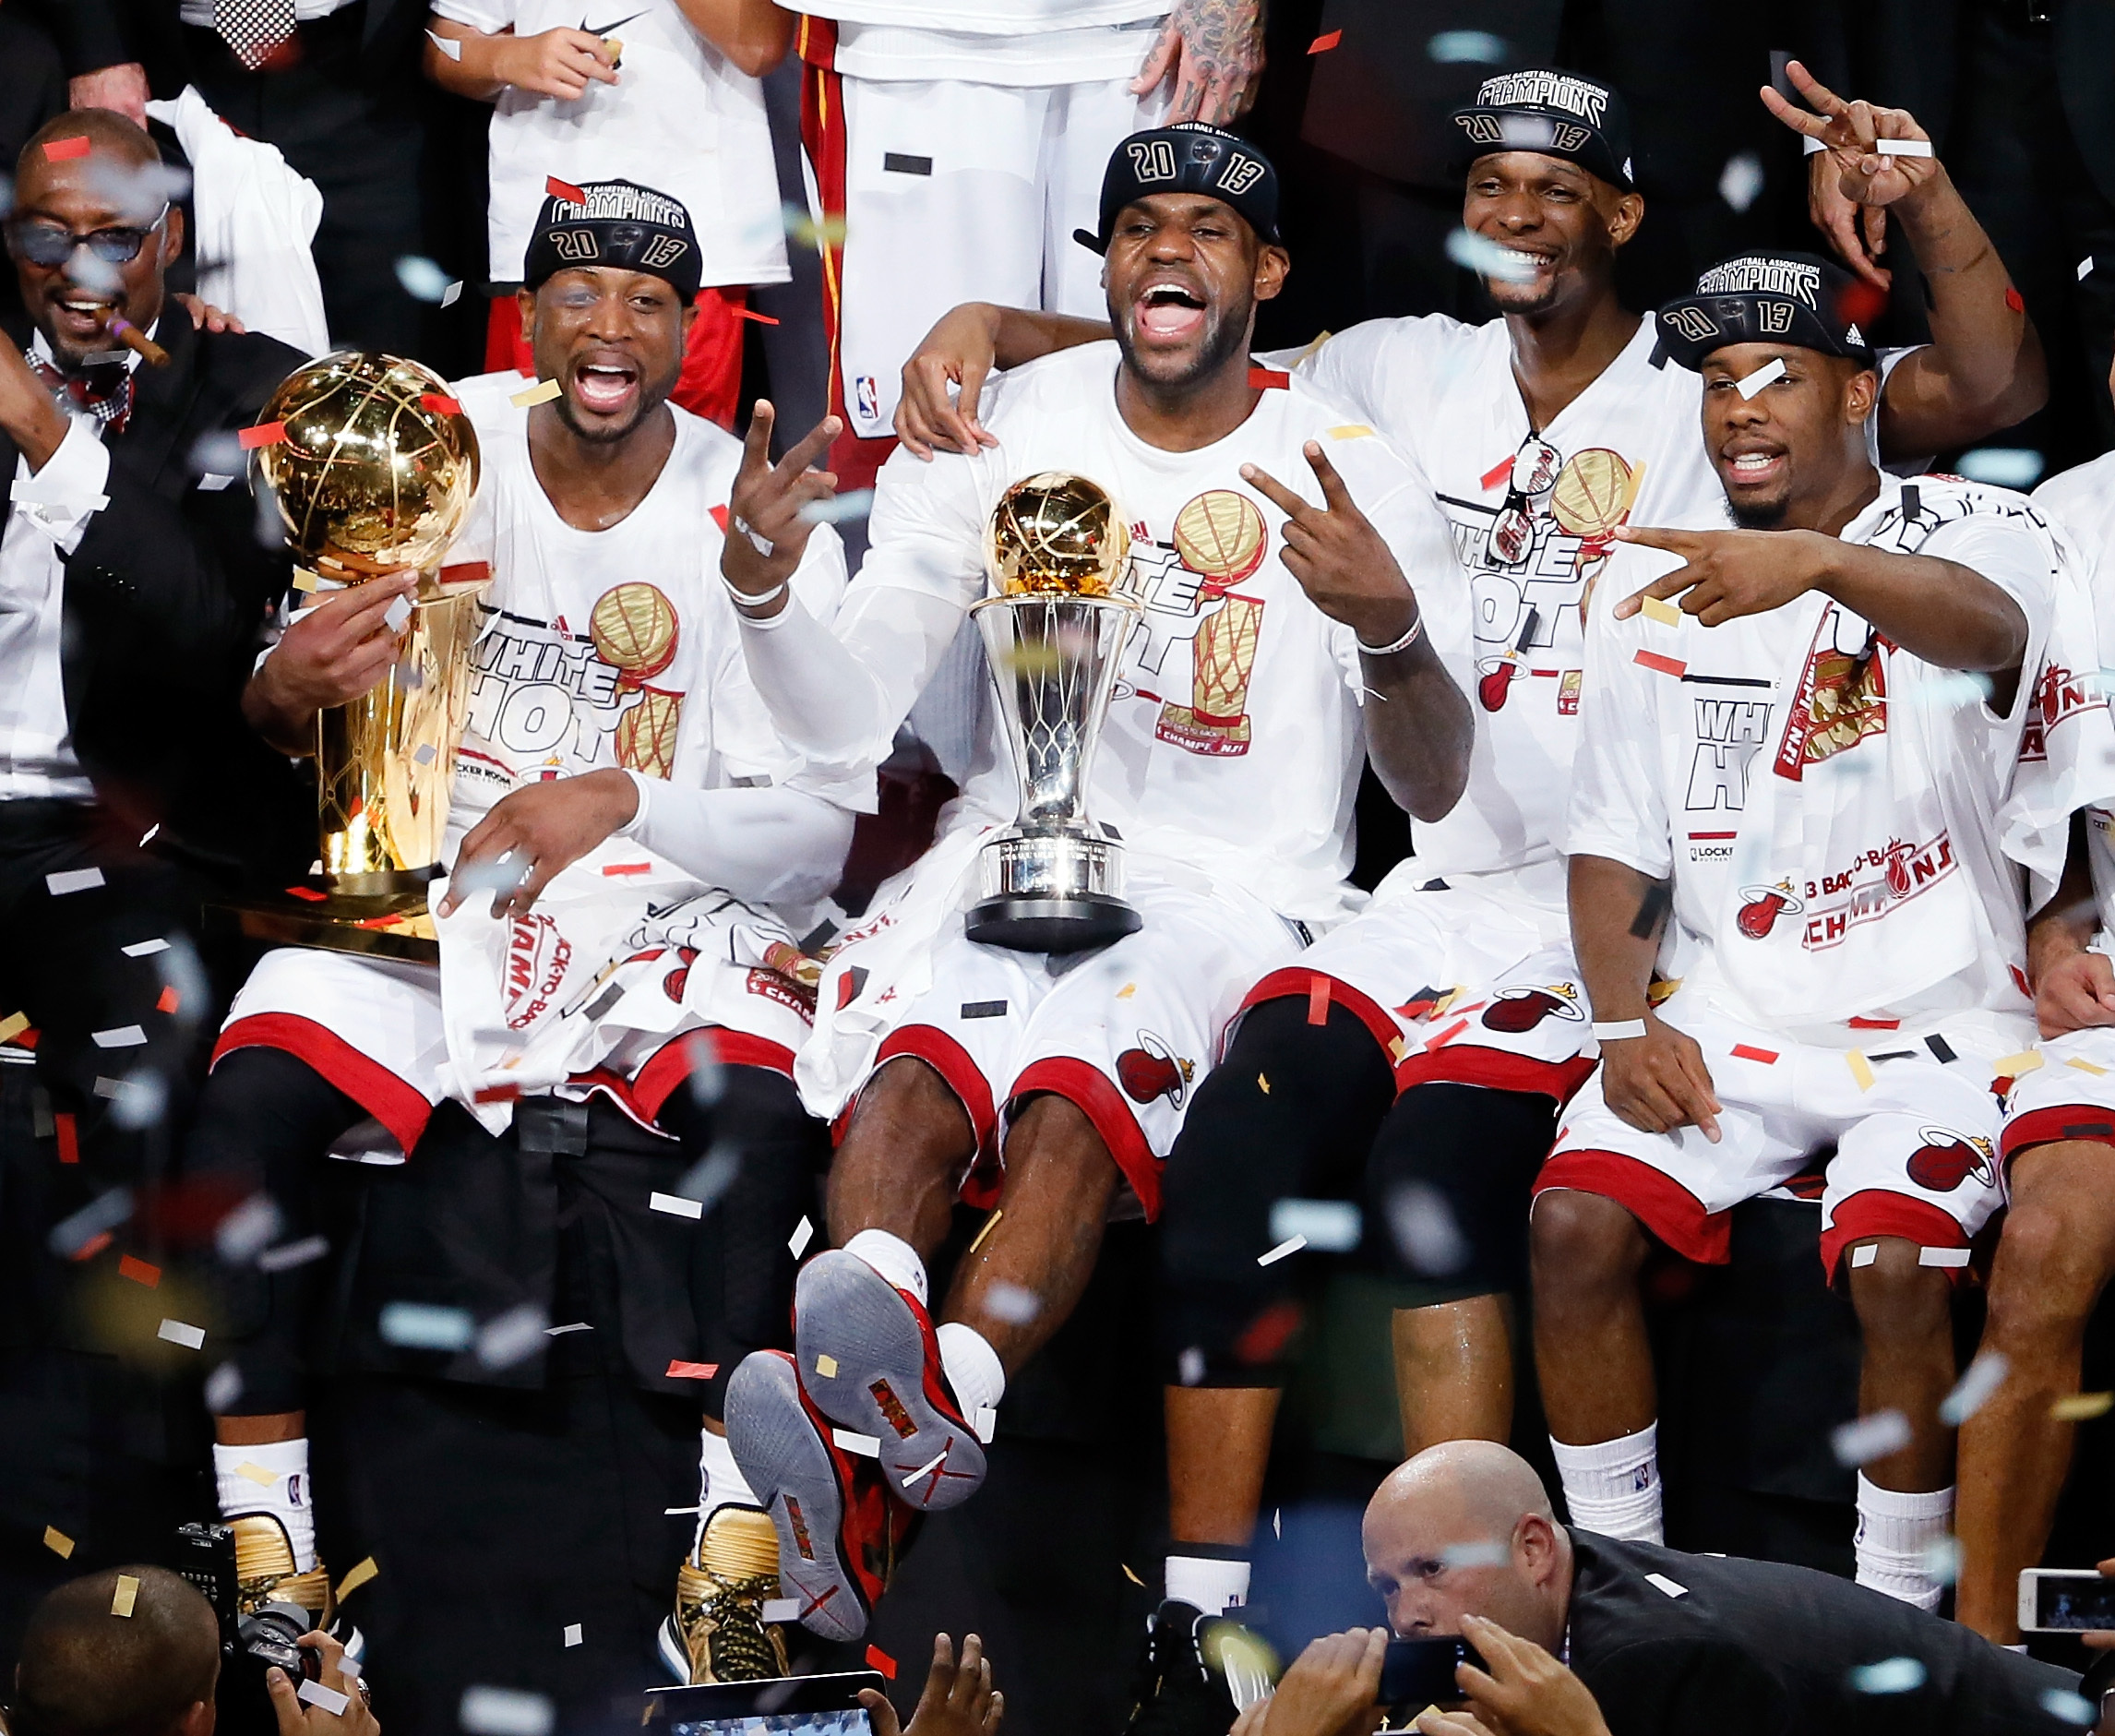 Heat beat Spurs 95-88 to win 2nd consecutive NBA championship - CBS News